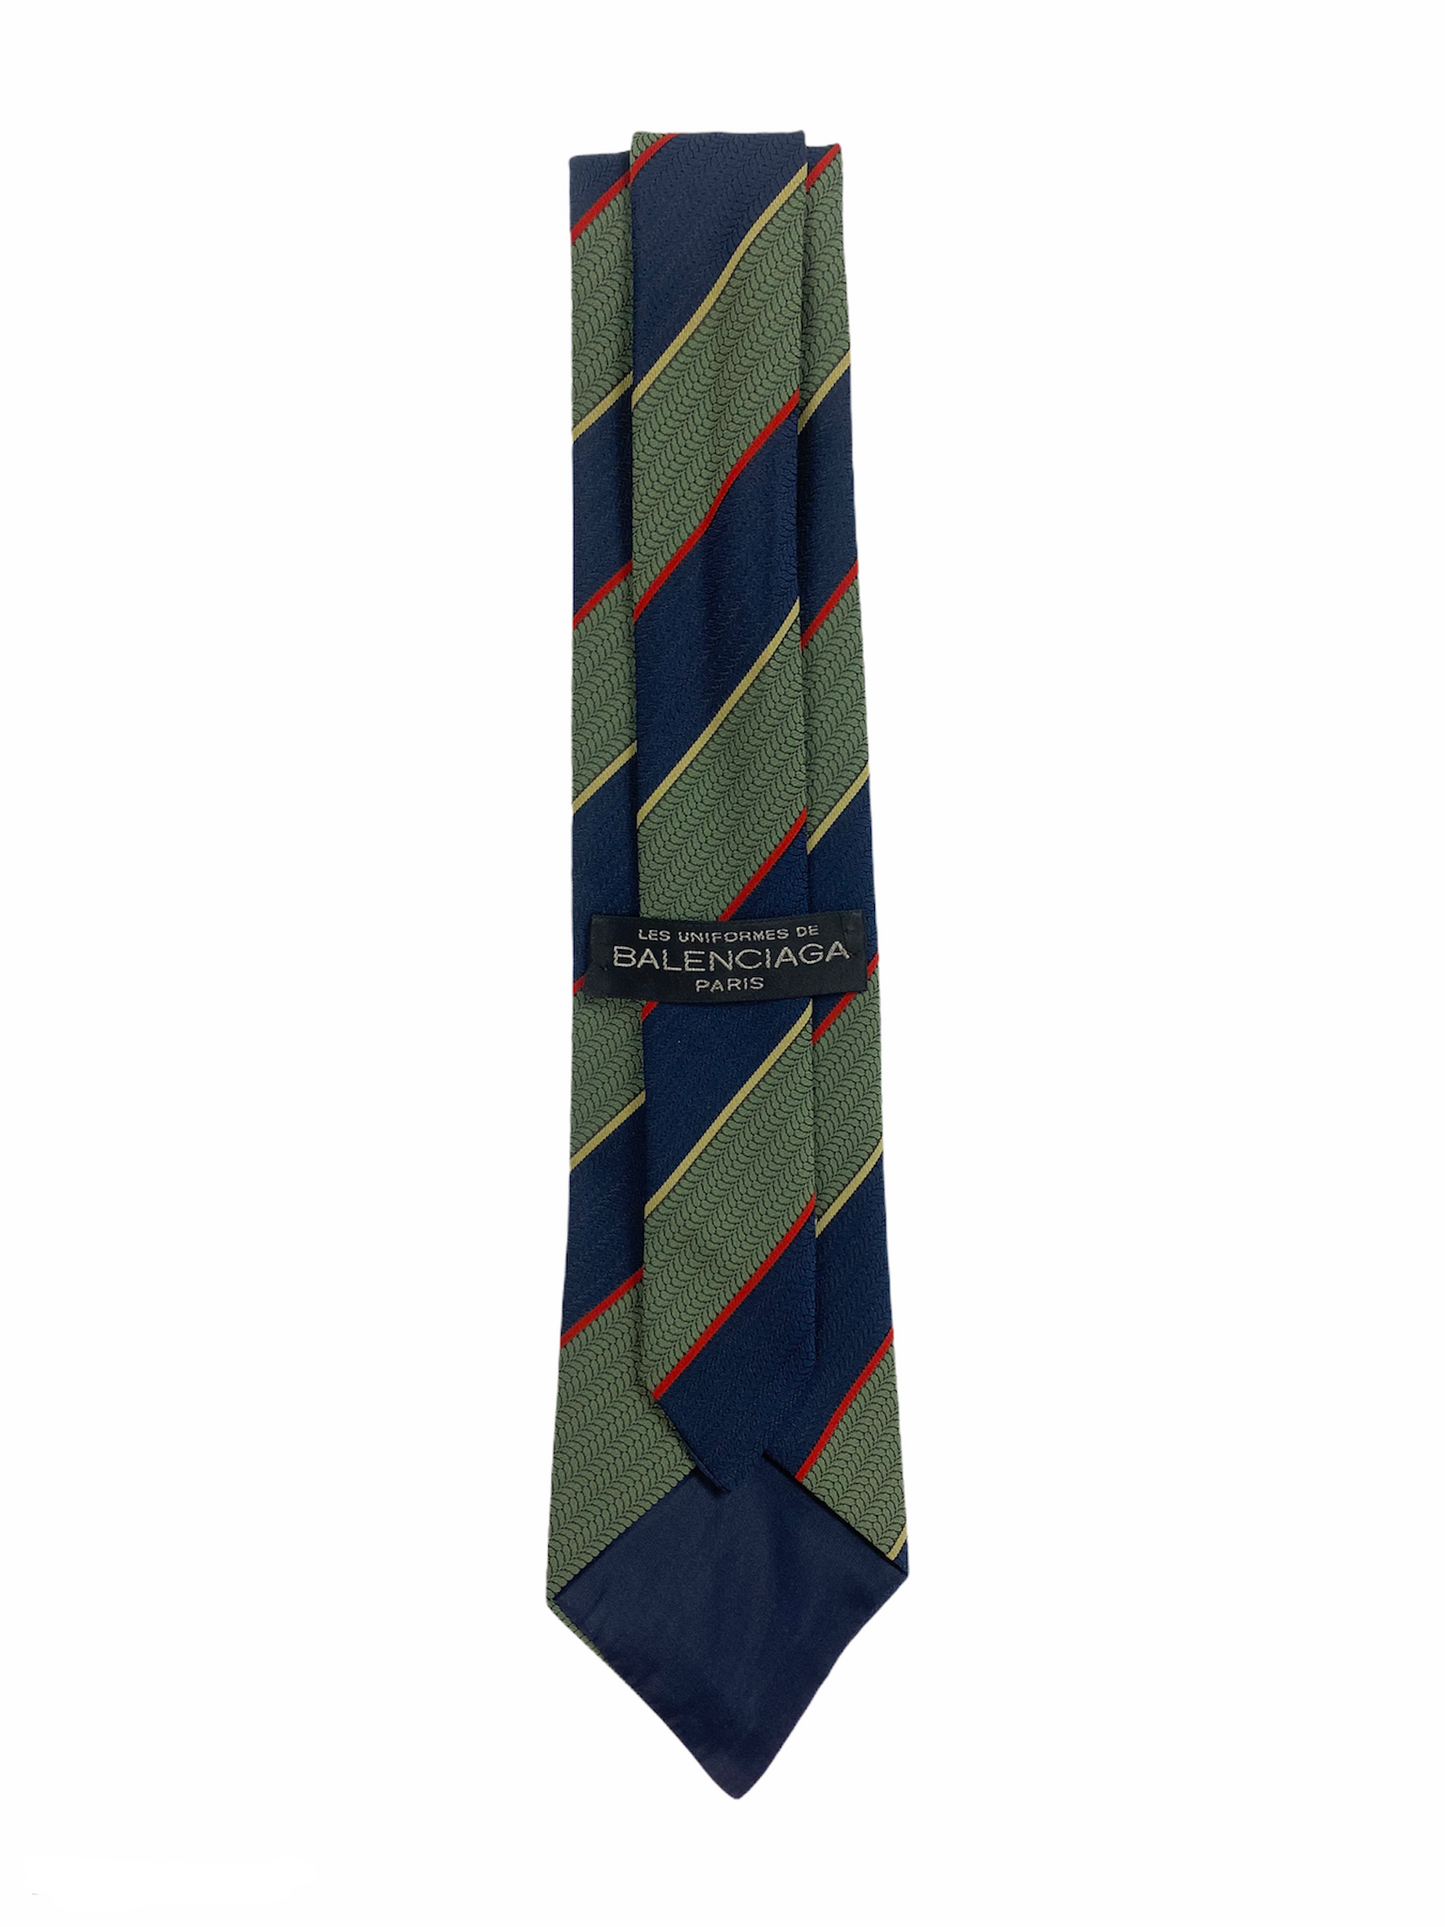 Cravate Balenciaga à rayures